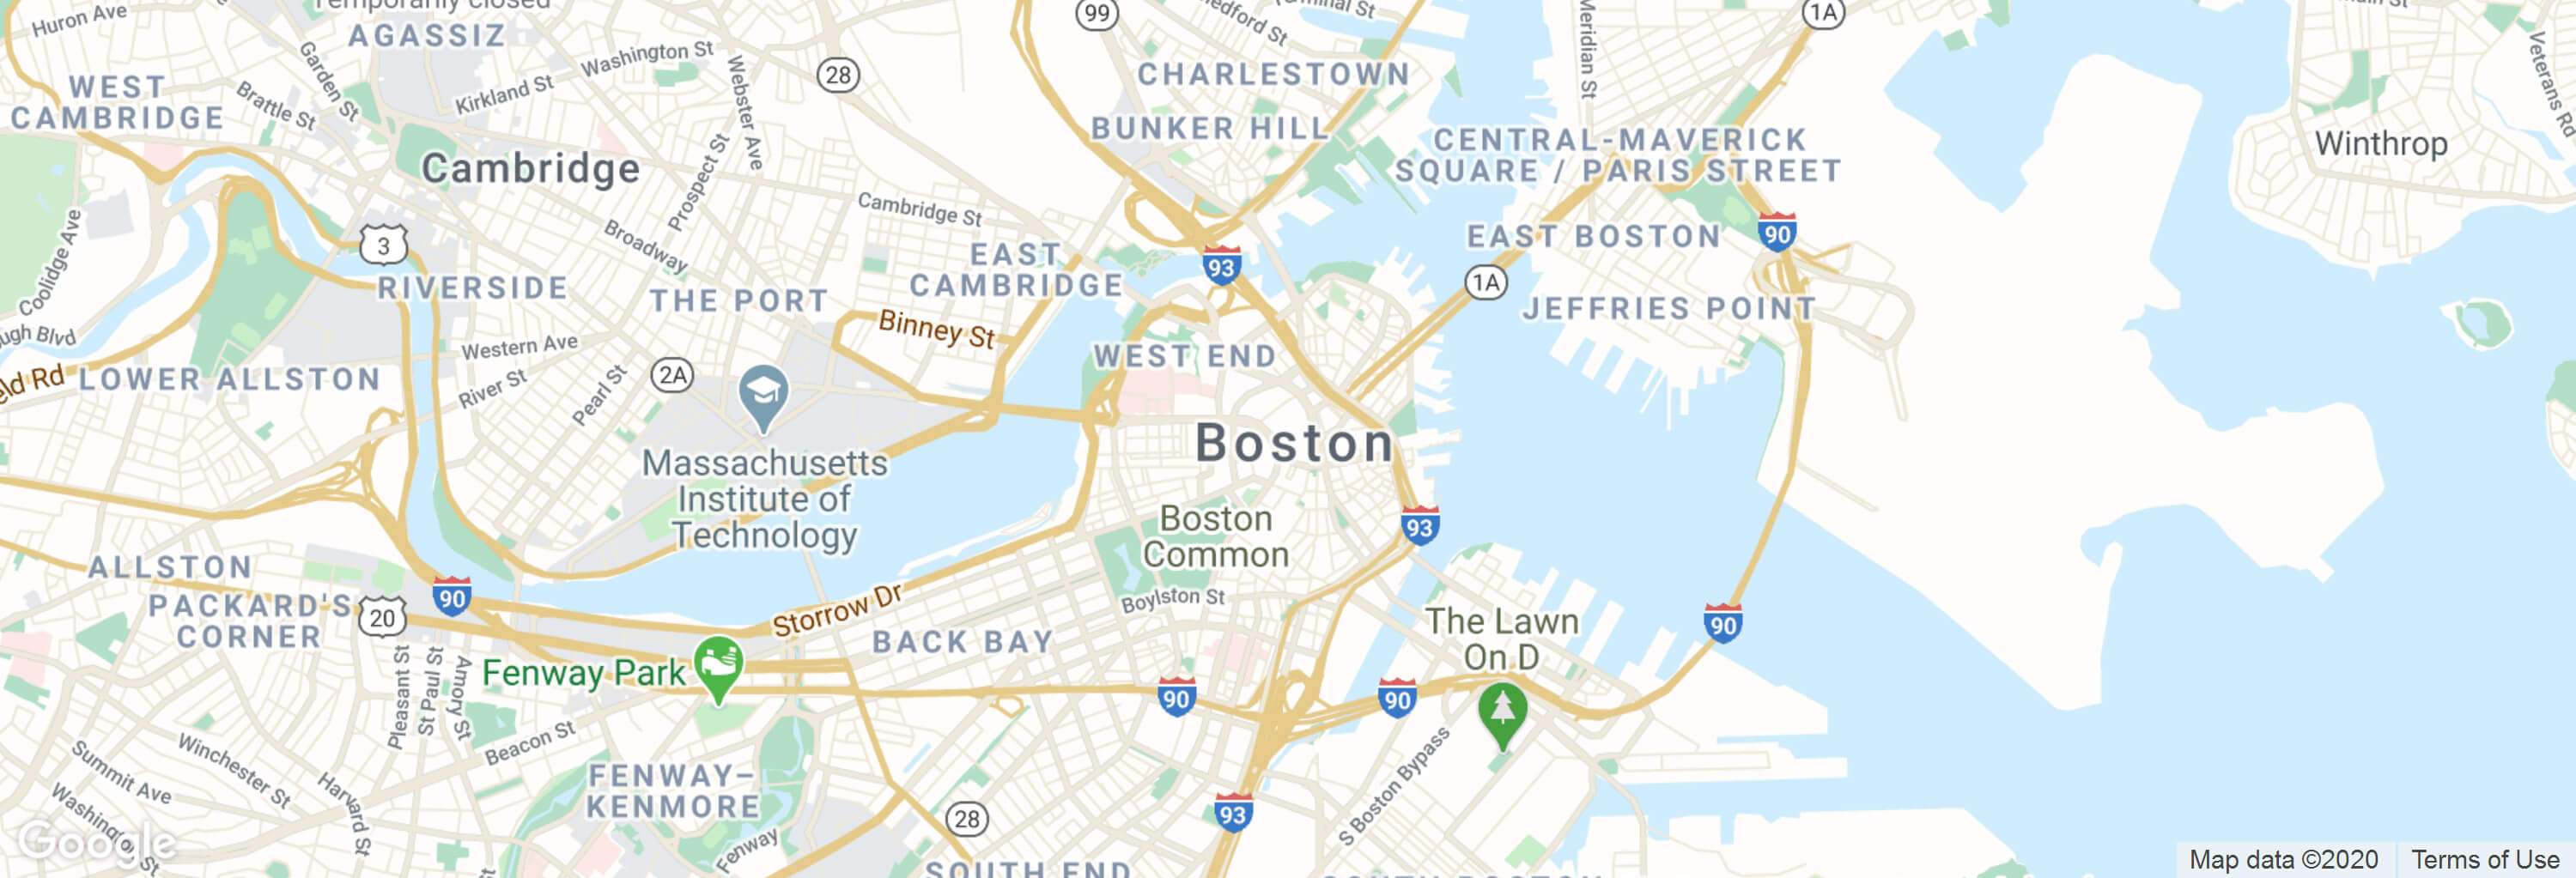 Boston city map